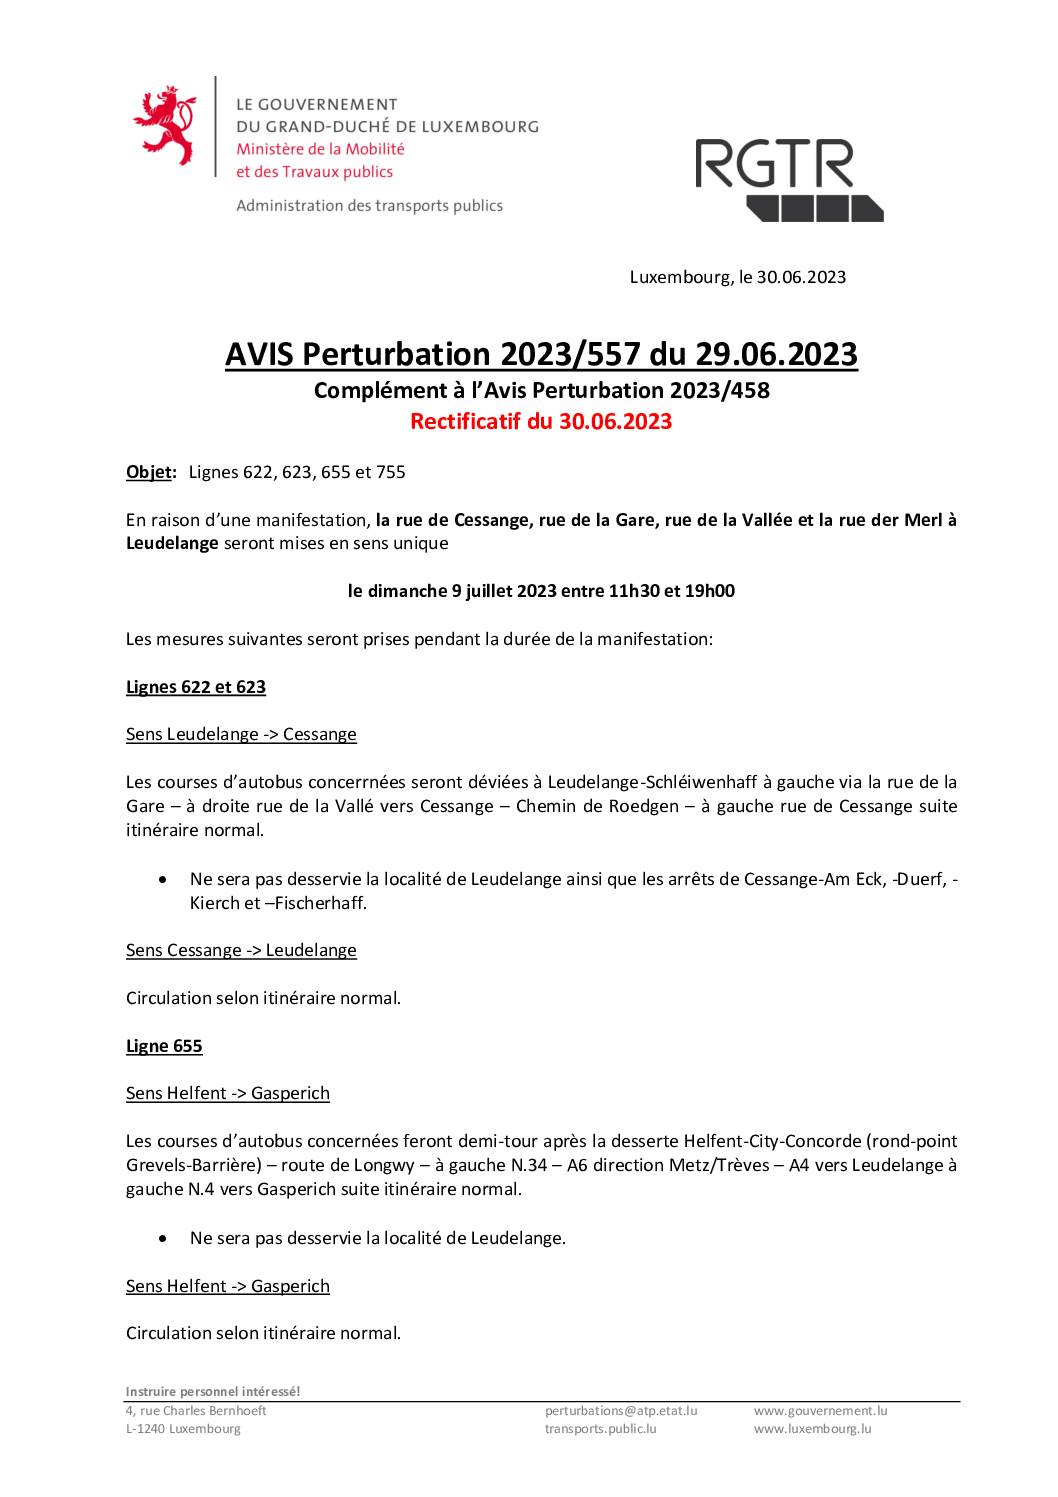 RGTR – AVIS Perturbation – Lignes 622, 623, 655 et 755